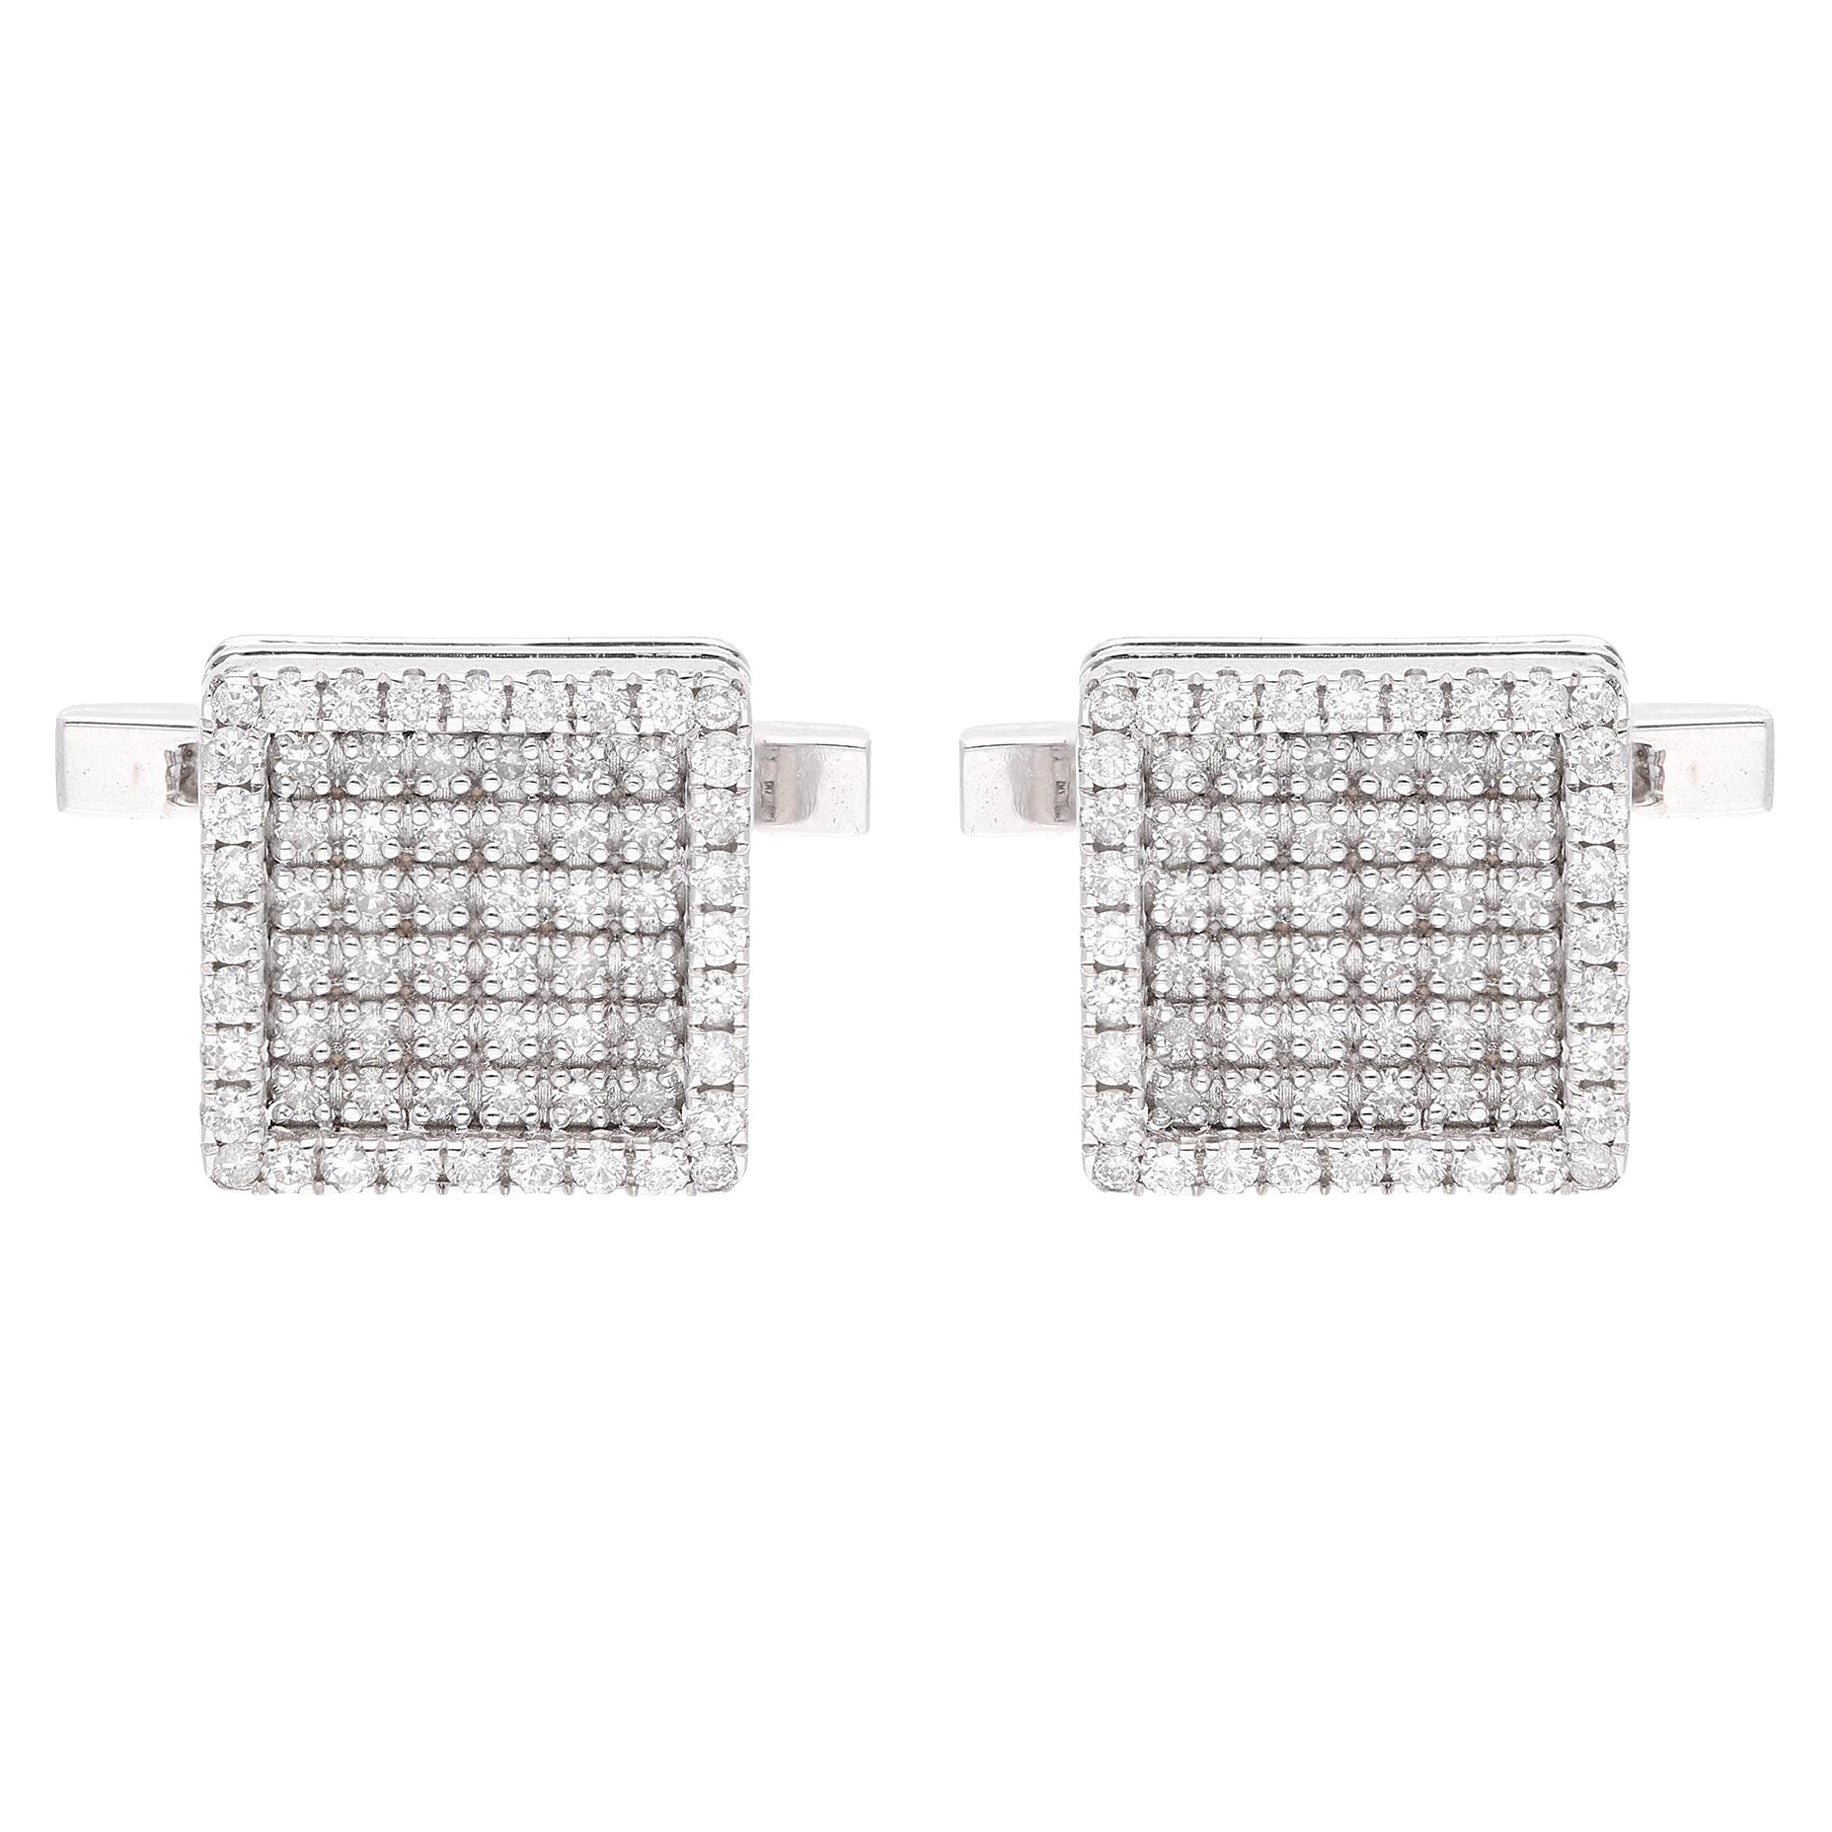 18 Karat White Gold 1.60 Carat Pave Set Diamond Square Cufflink Men's Jewelry